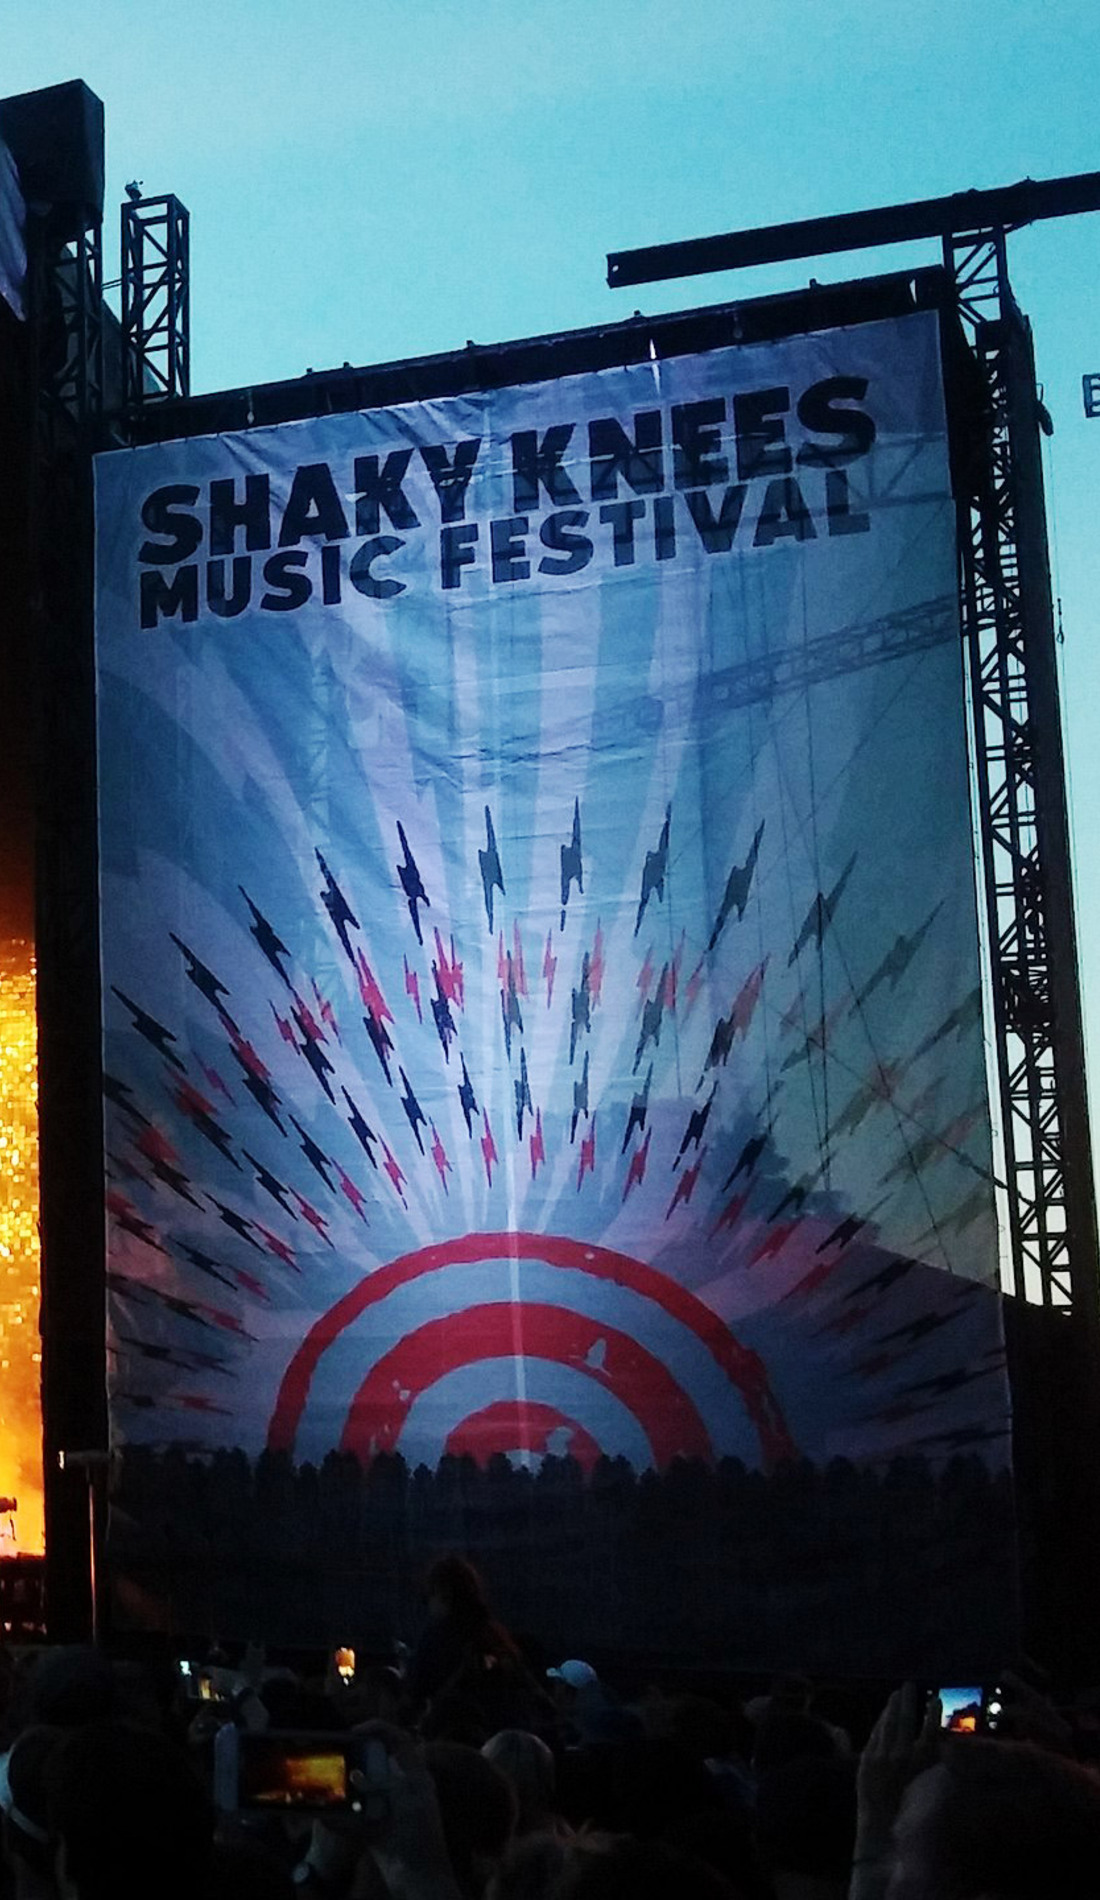 A Shaky Knees Music Festival live event